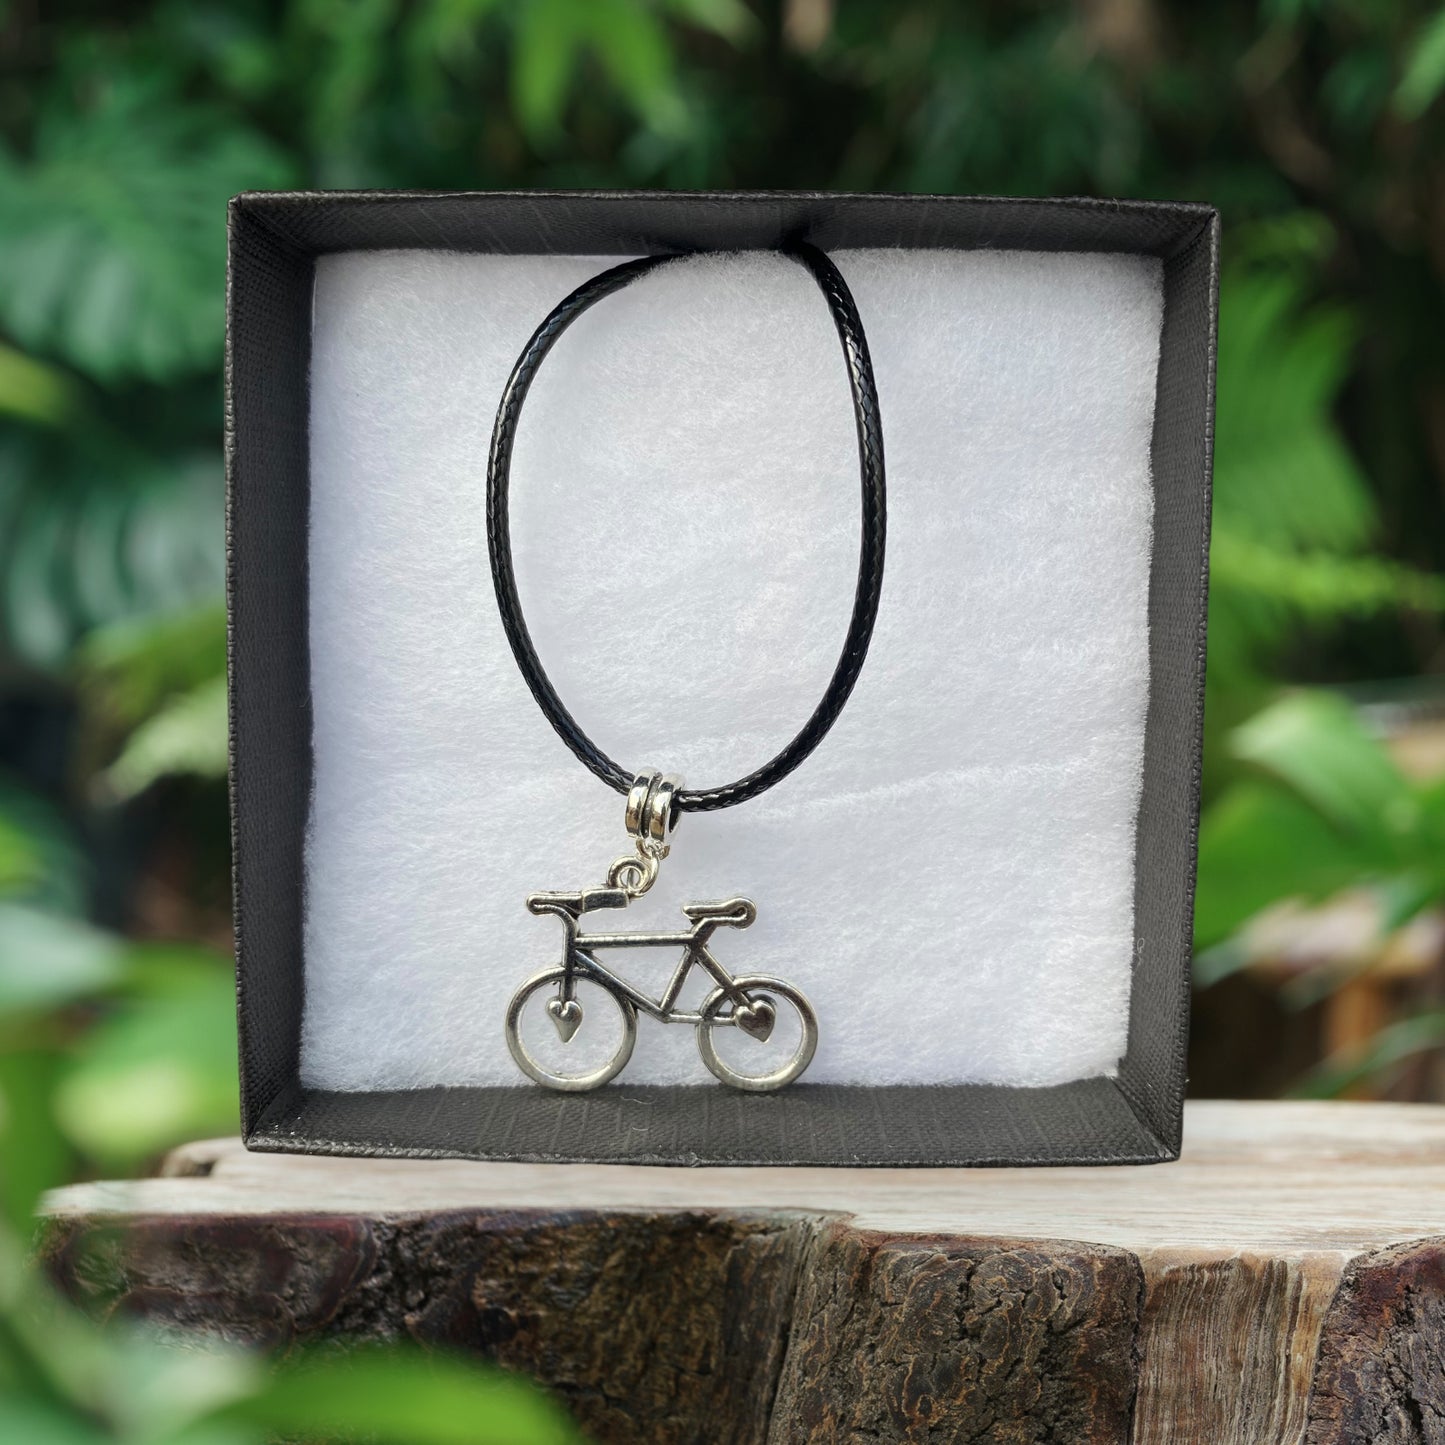 Bike Pendant Necklace